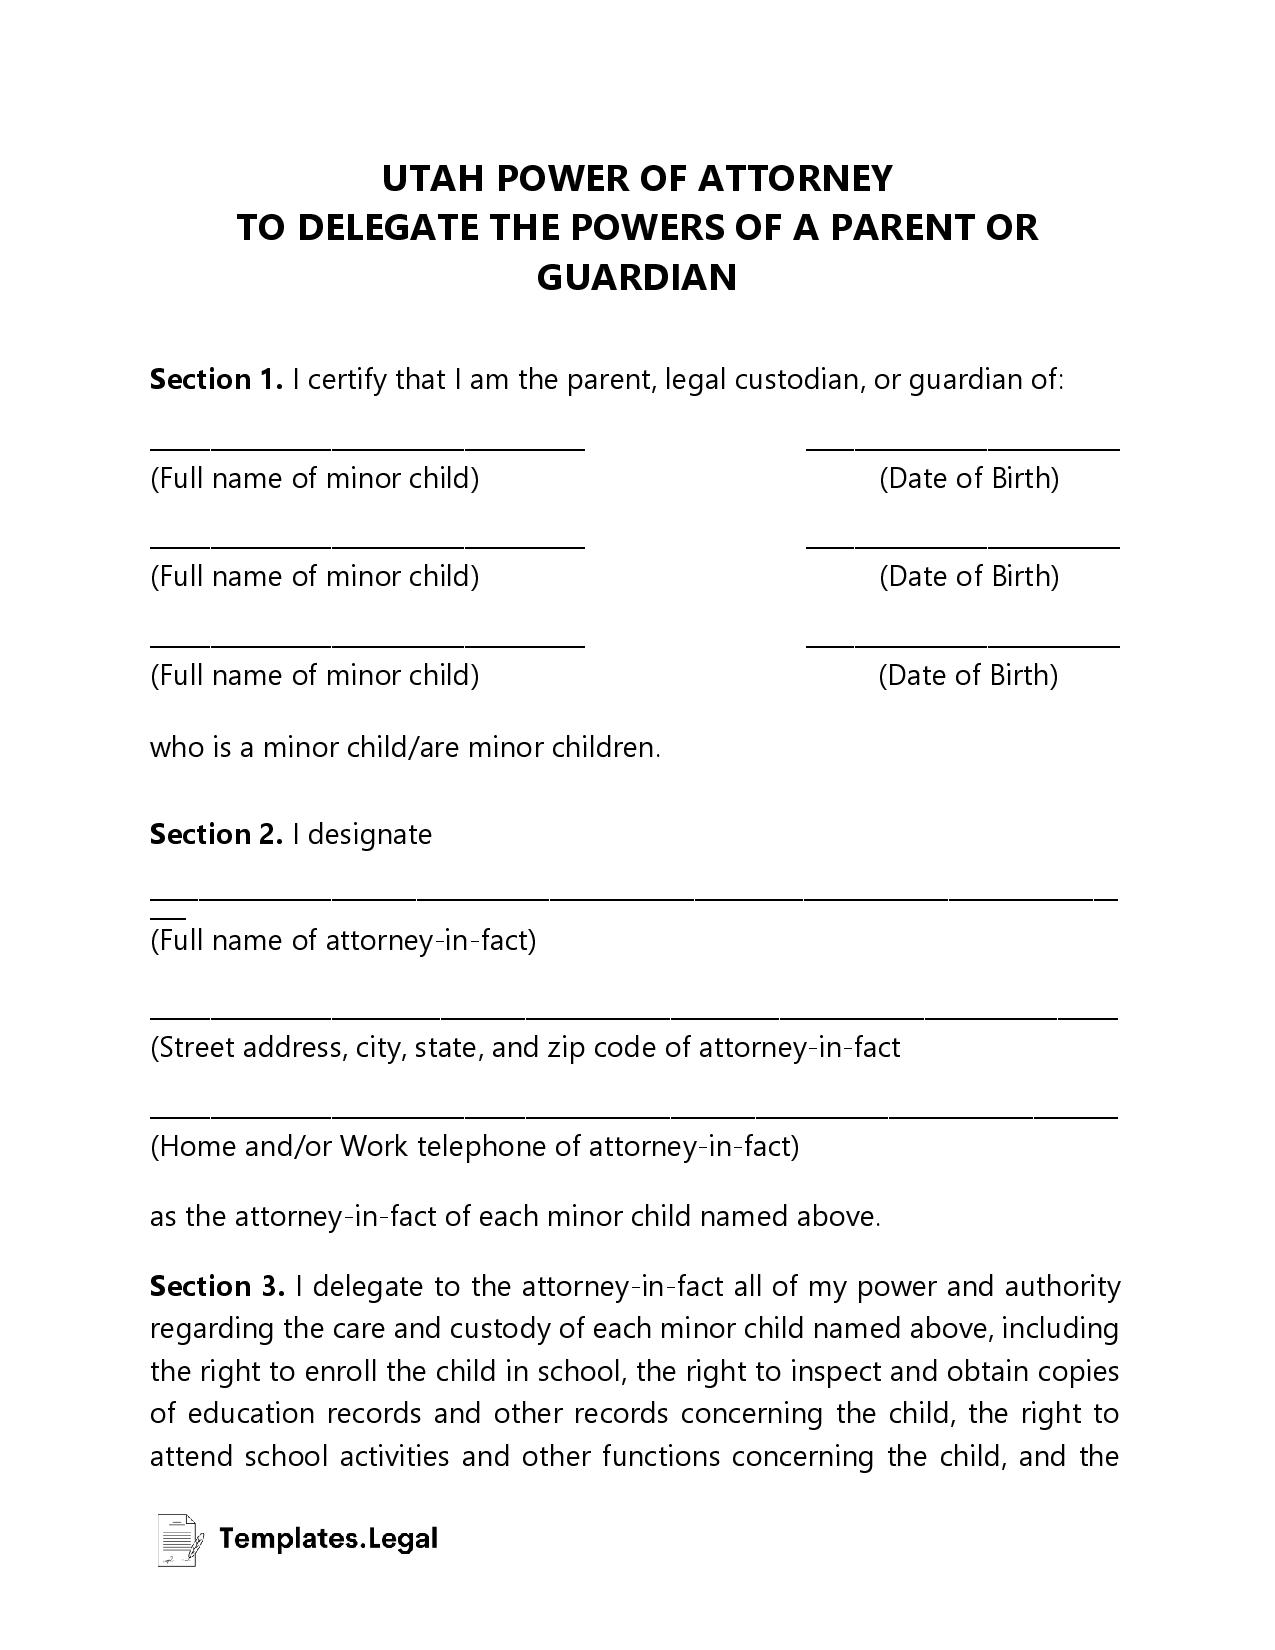 Utah Minor (Child) Power of Attorney - Templates.Legal